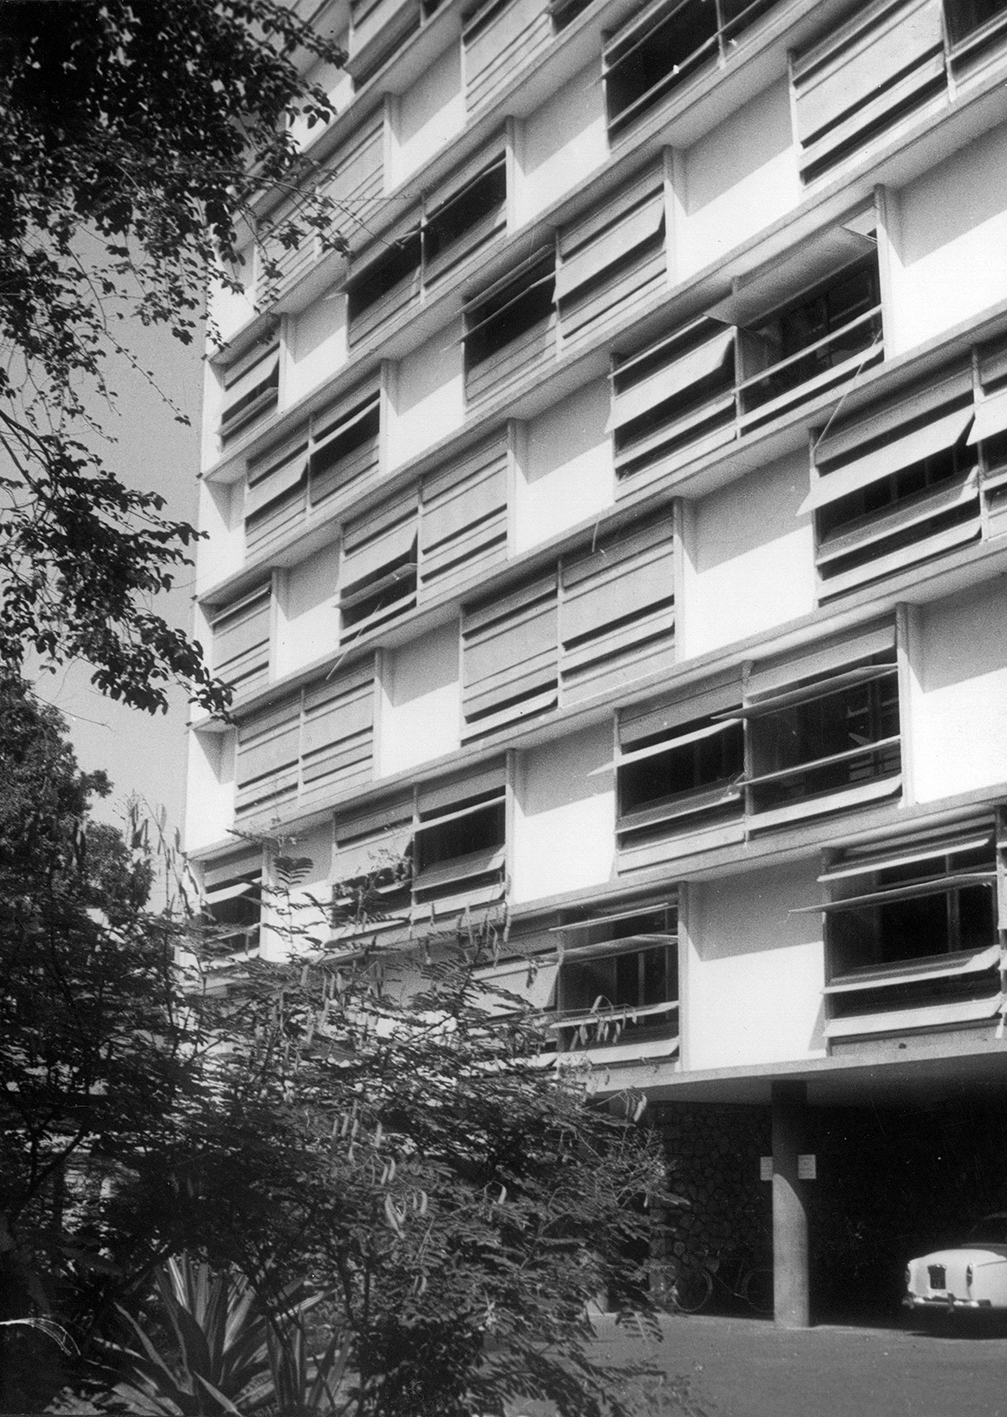 Apartment building, Conakry, 1953 (Atelier LWD Lagneau, Weill, Dimitrijevic, architects). Pivoting sun shutter facade panels designed by Jean Prouvé.